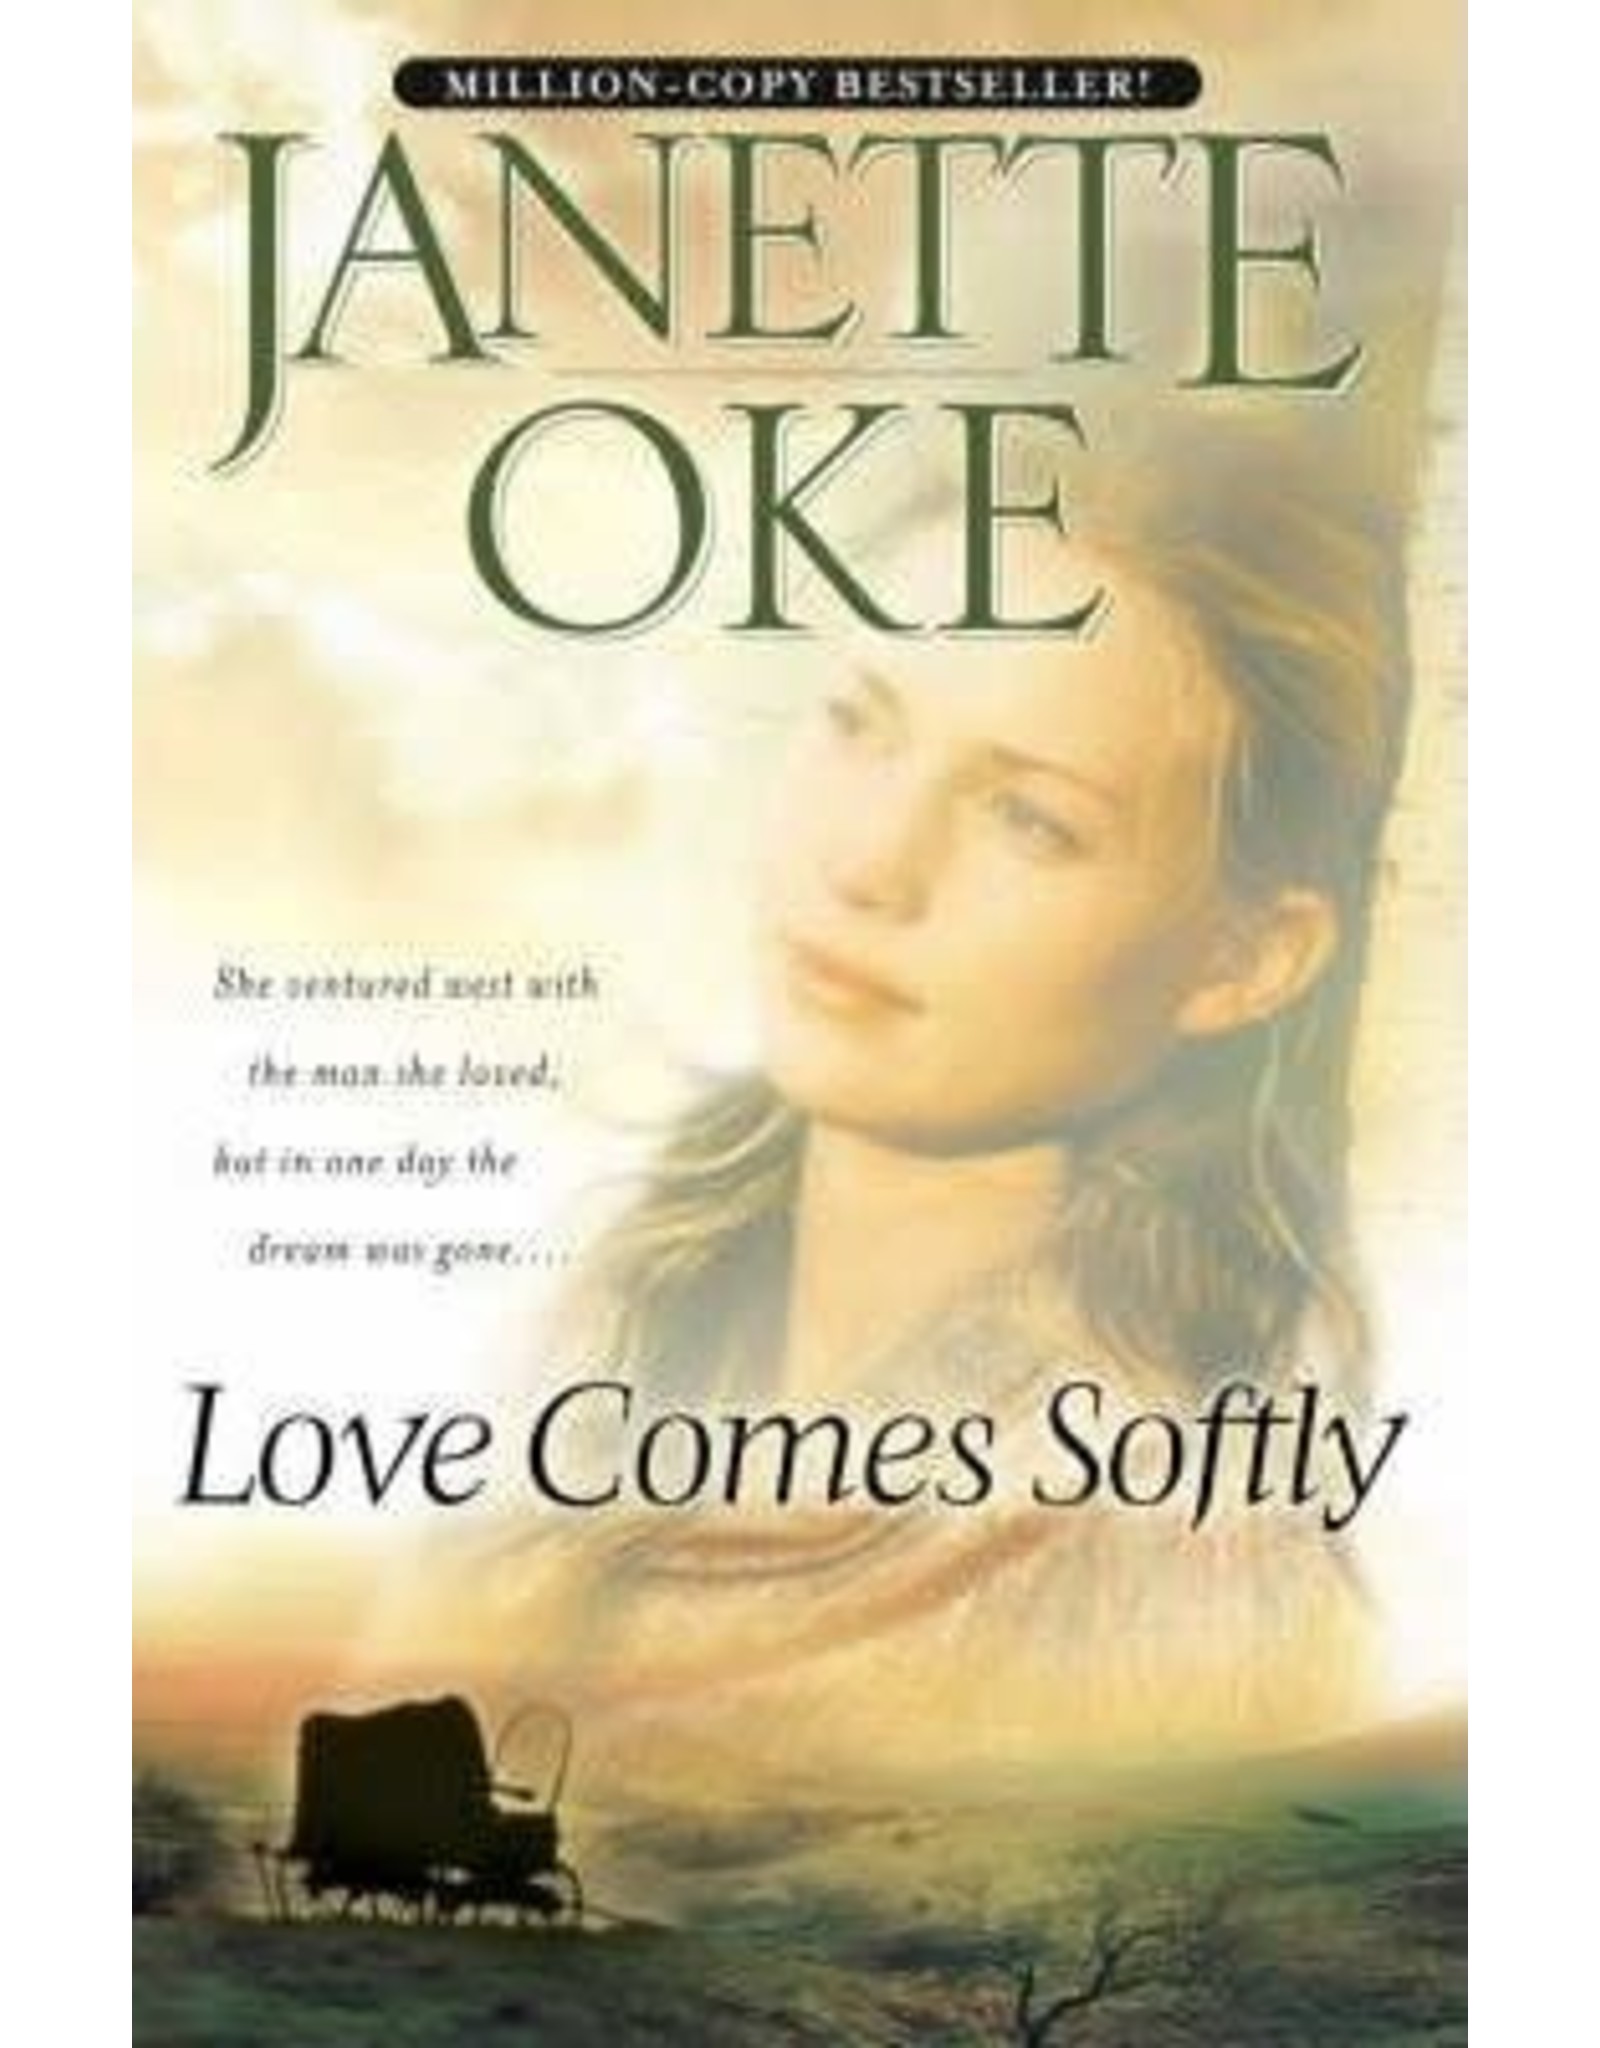 Janette Oke Love Comes Softly